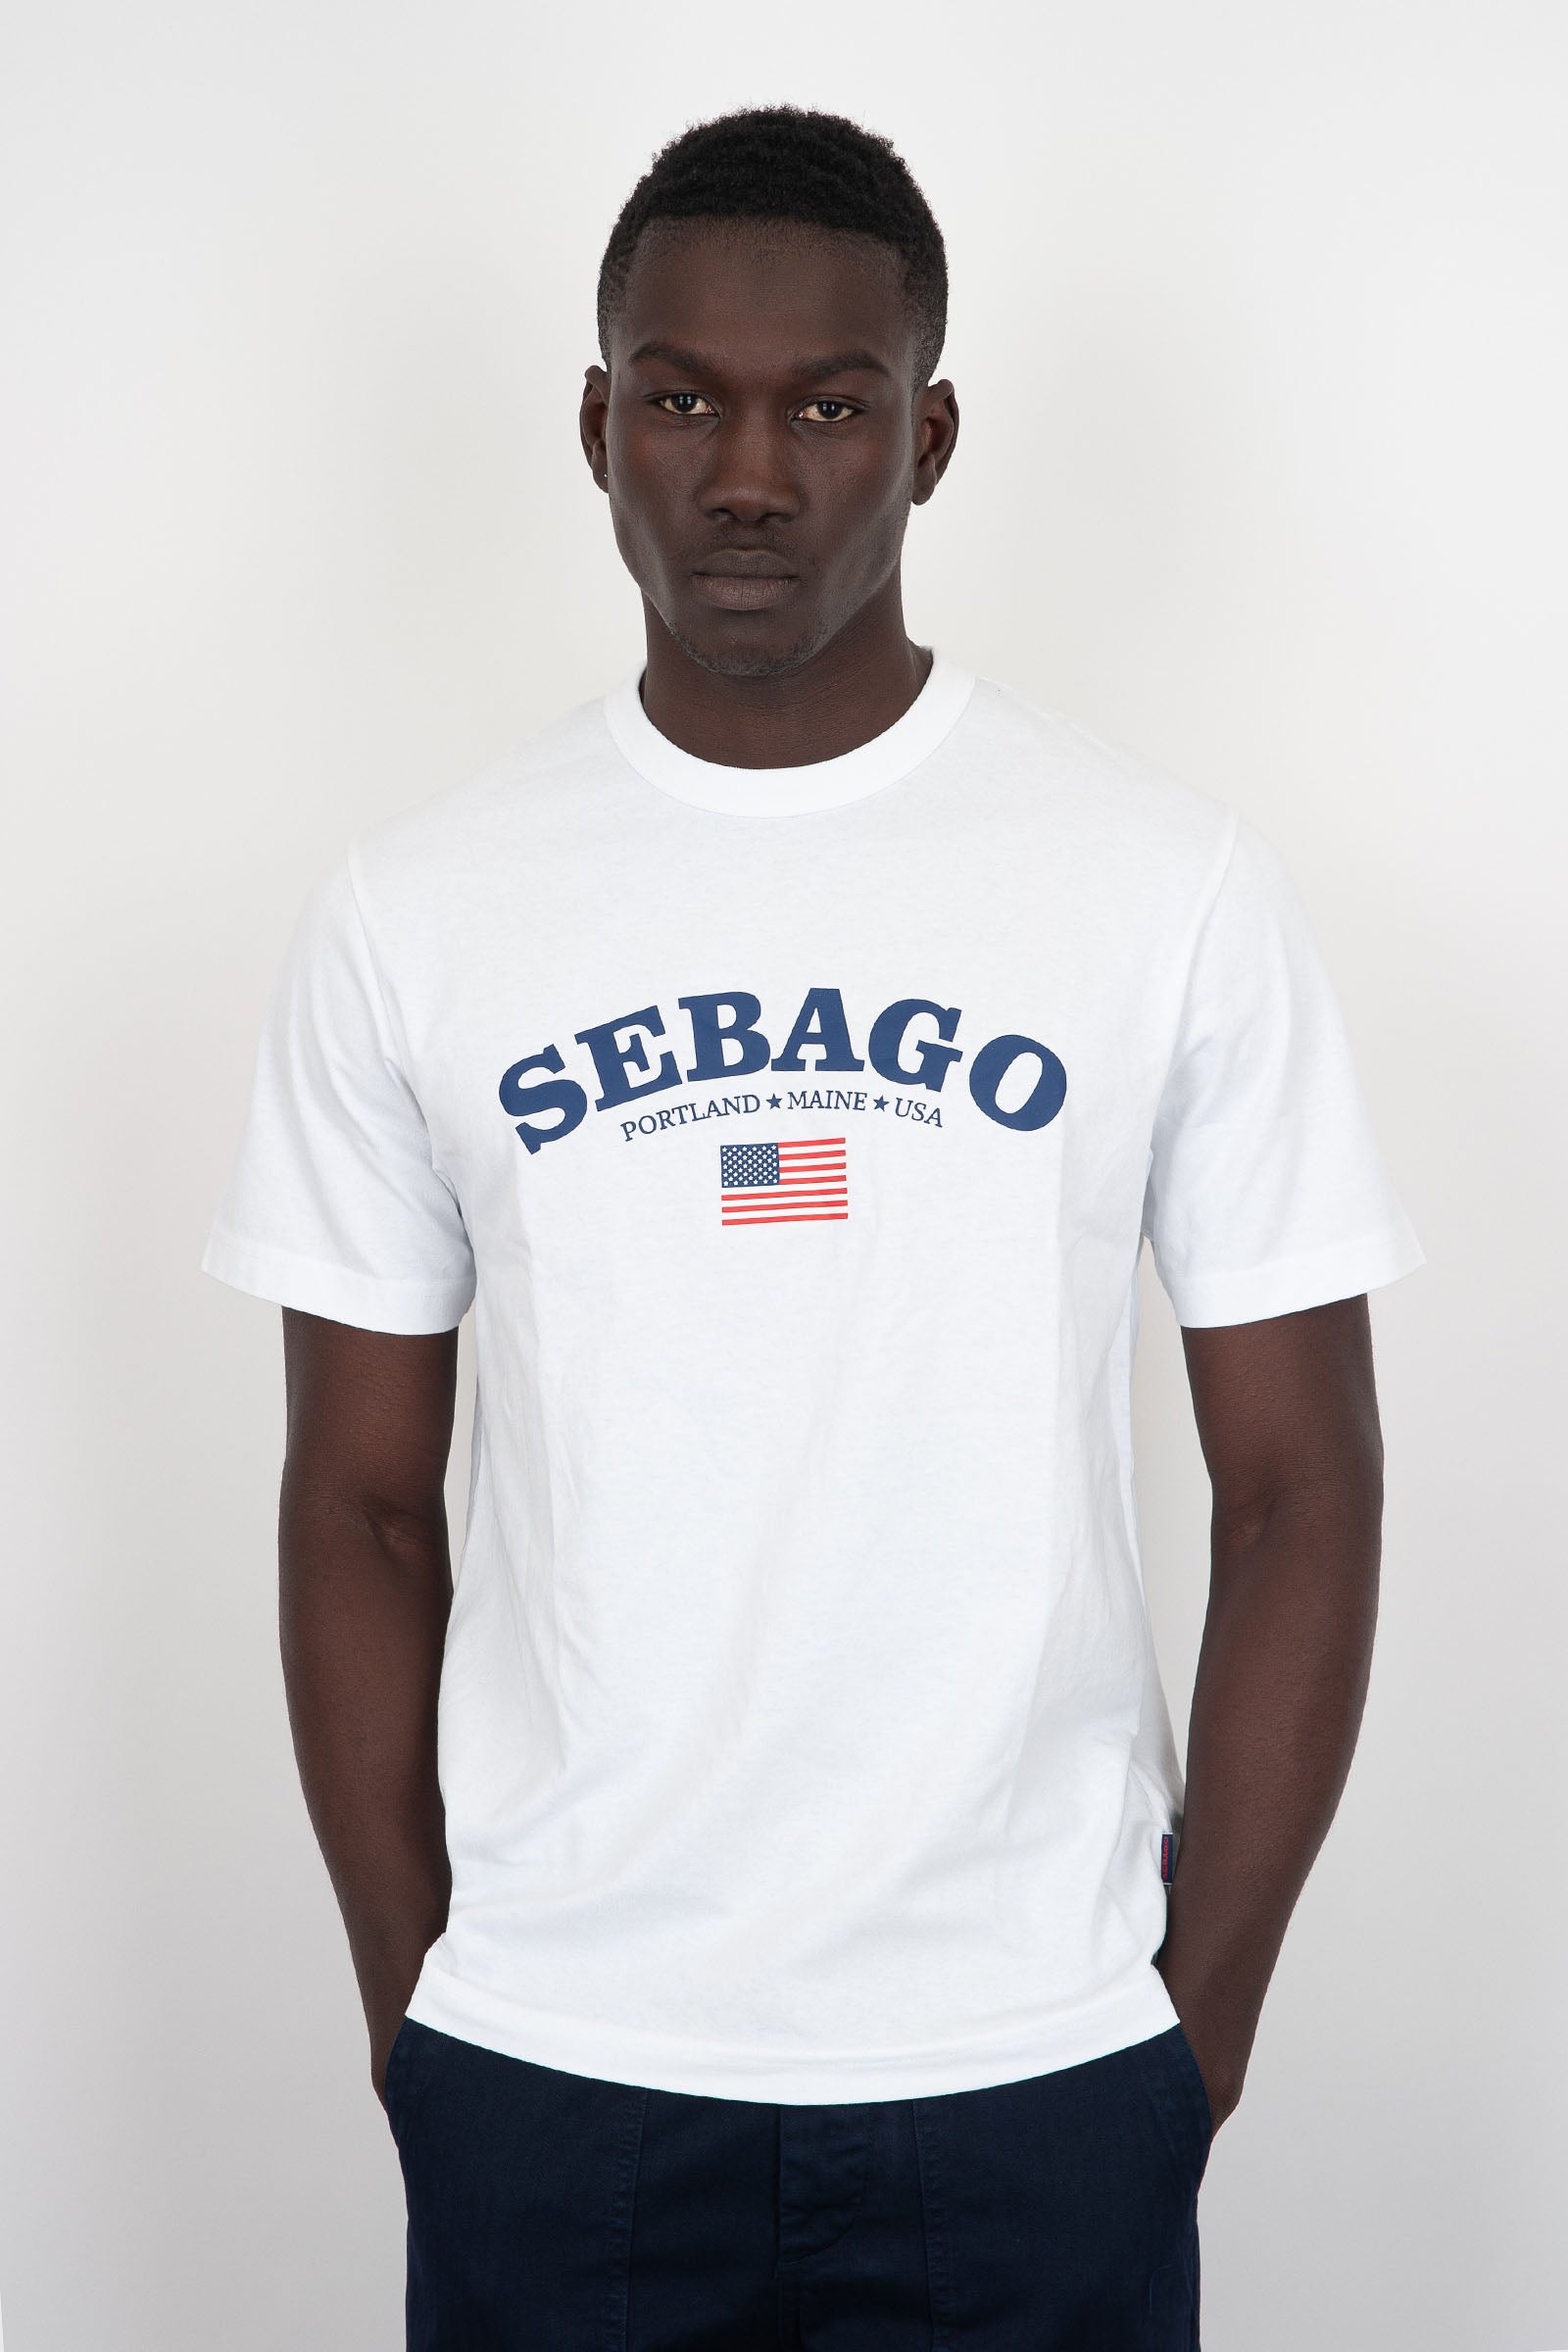 Sebago T-Shirt Wiscasset Cotton White - 1